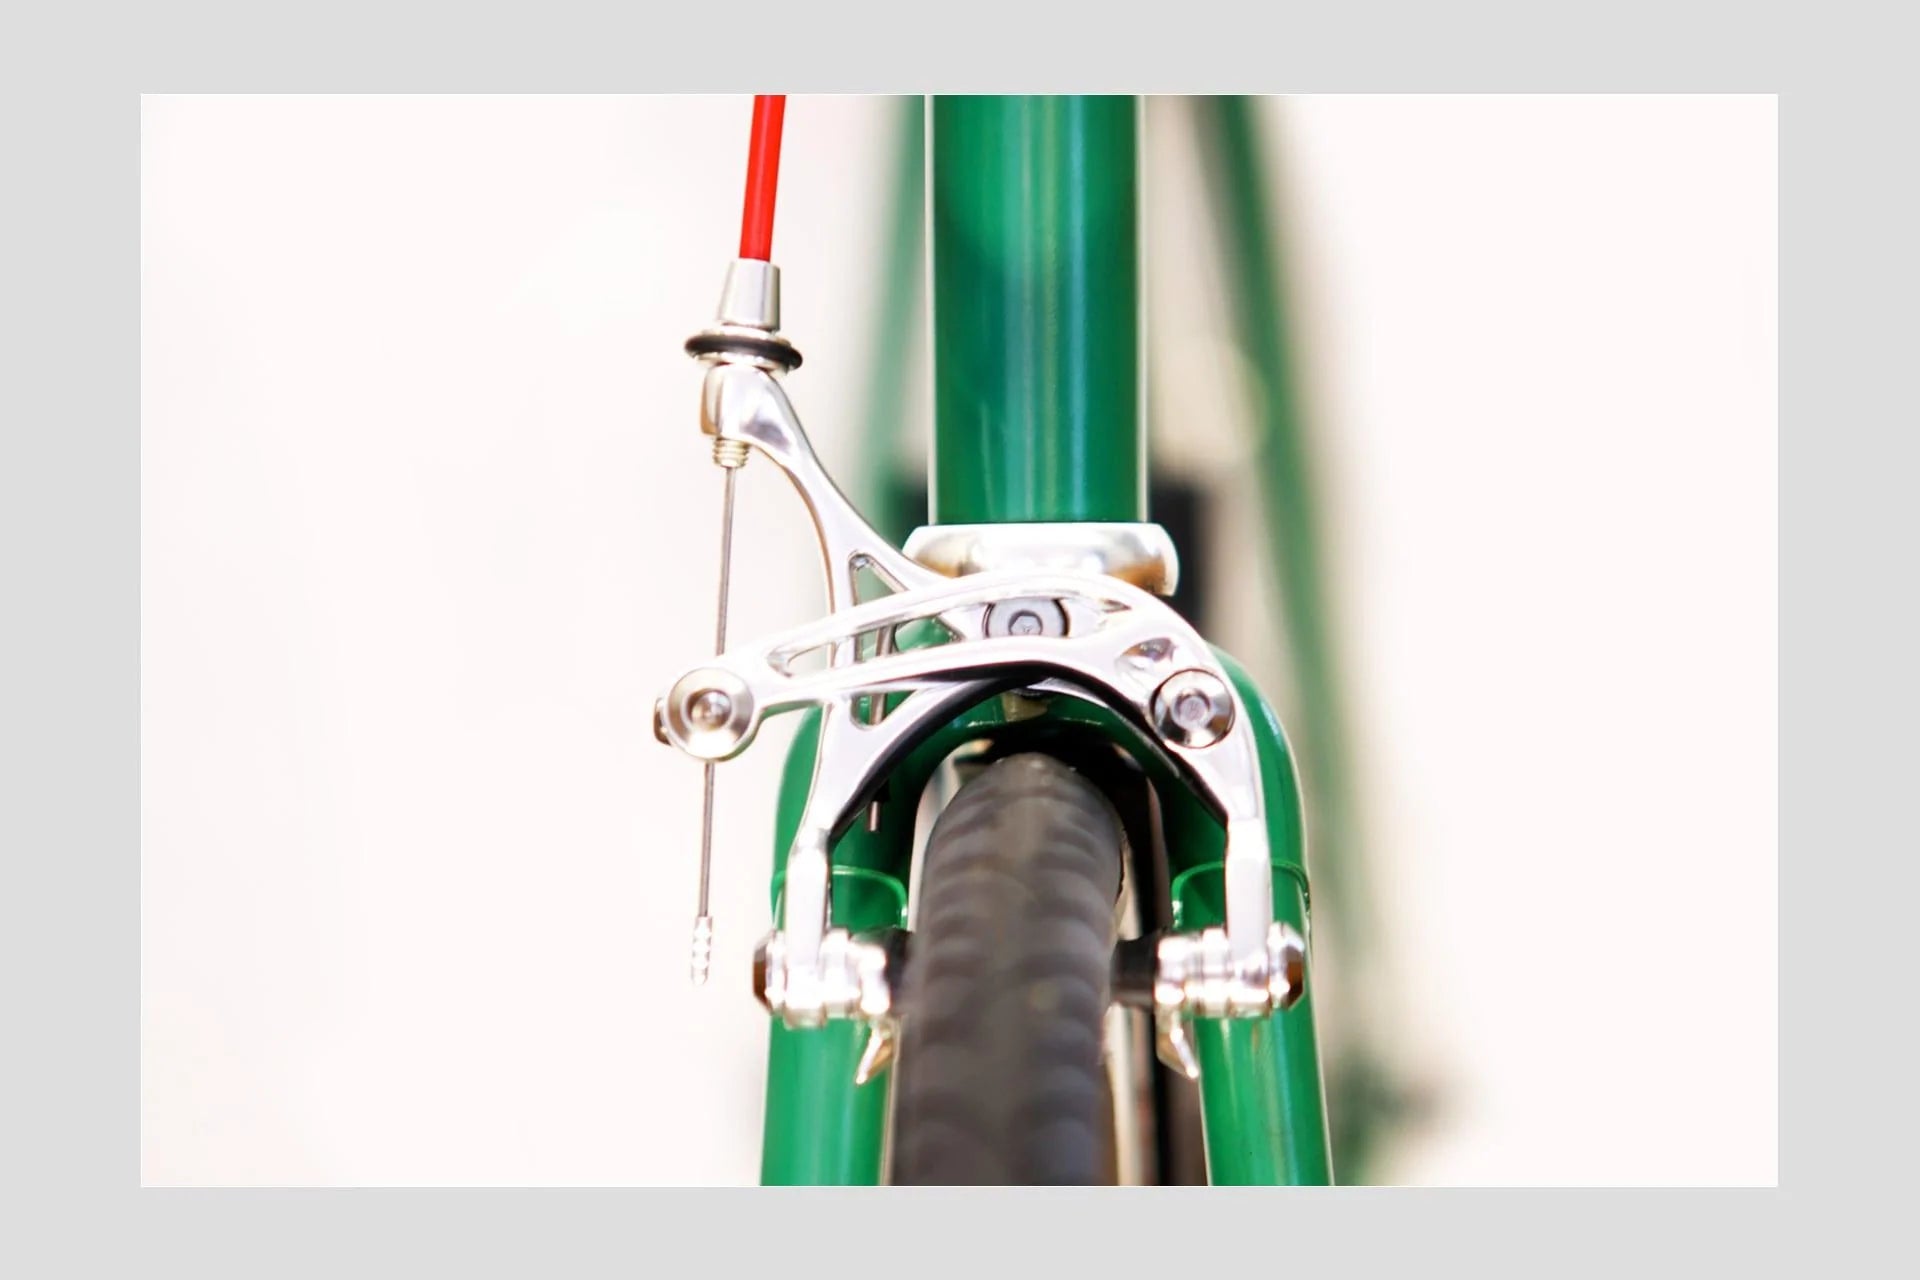 HATTARA - Electric - 2gear - Vert fonce - GOrilla . urban cycling